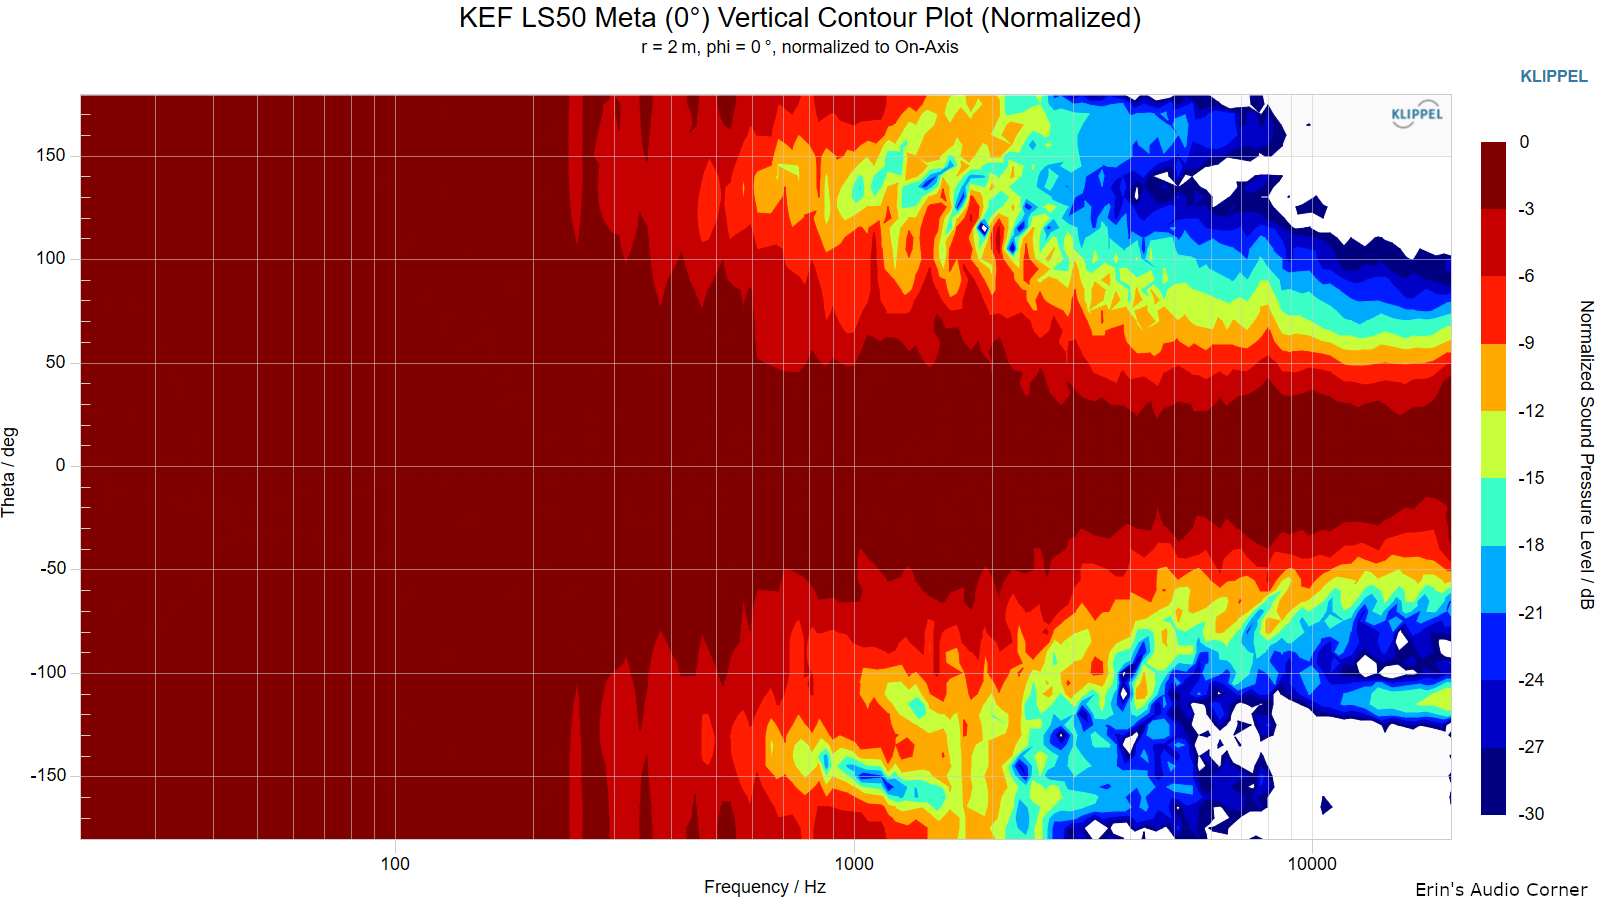 KEF-LS50-Meta-0-Vertical-Contour-Plot-Normalized.png